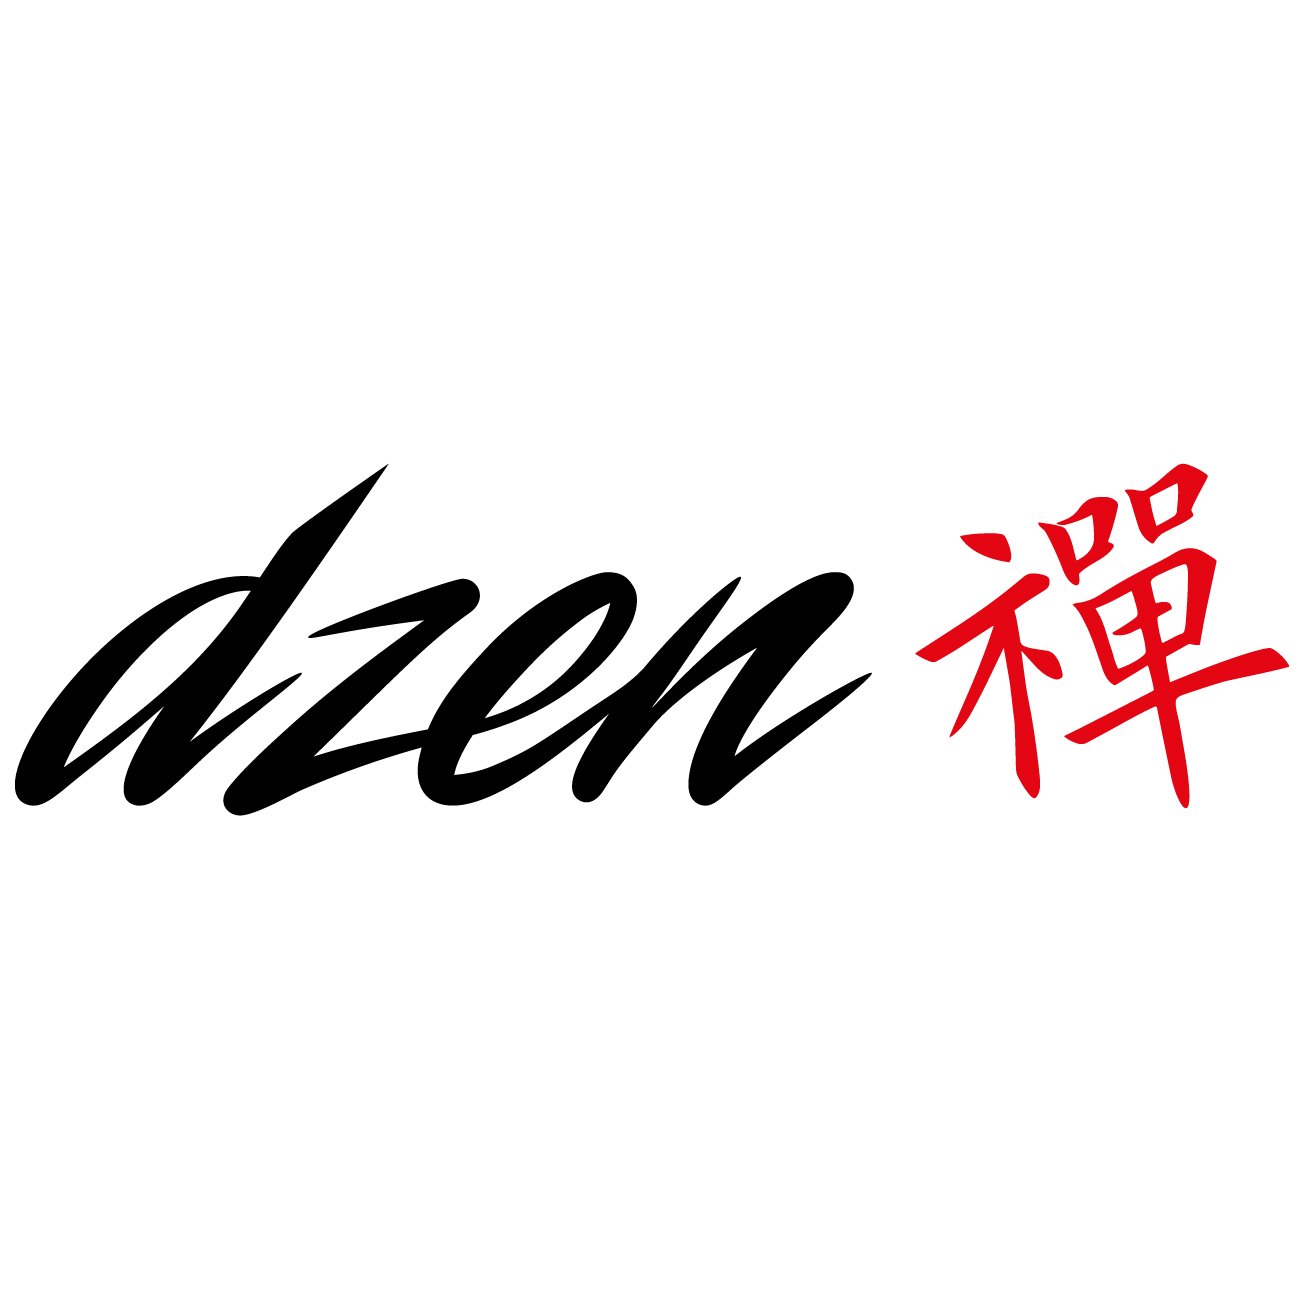 "логотип бренда Dzen (Дзен)"